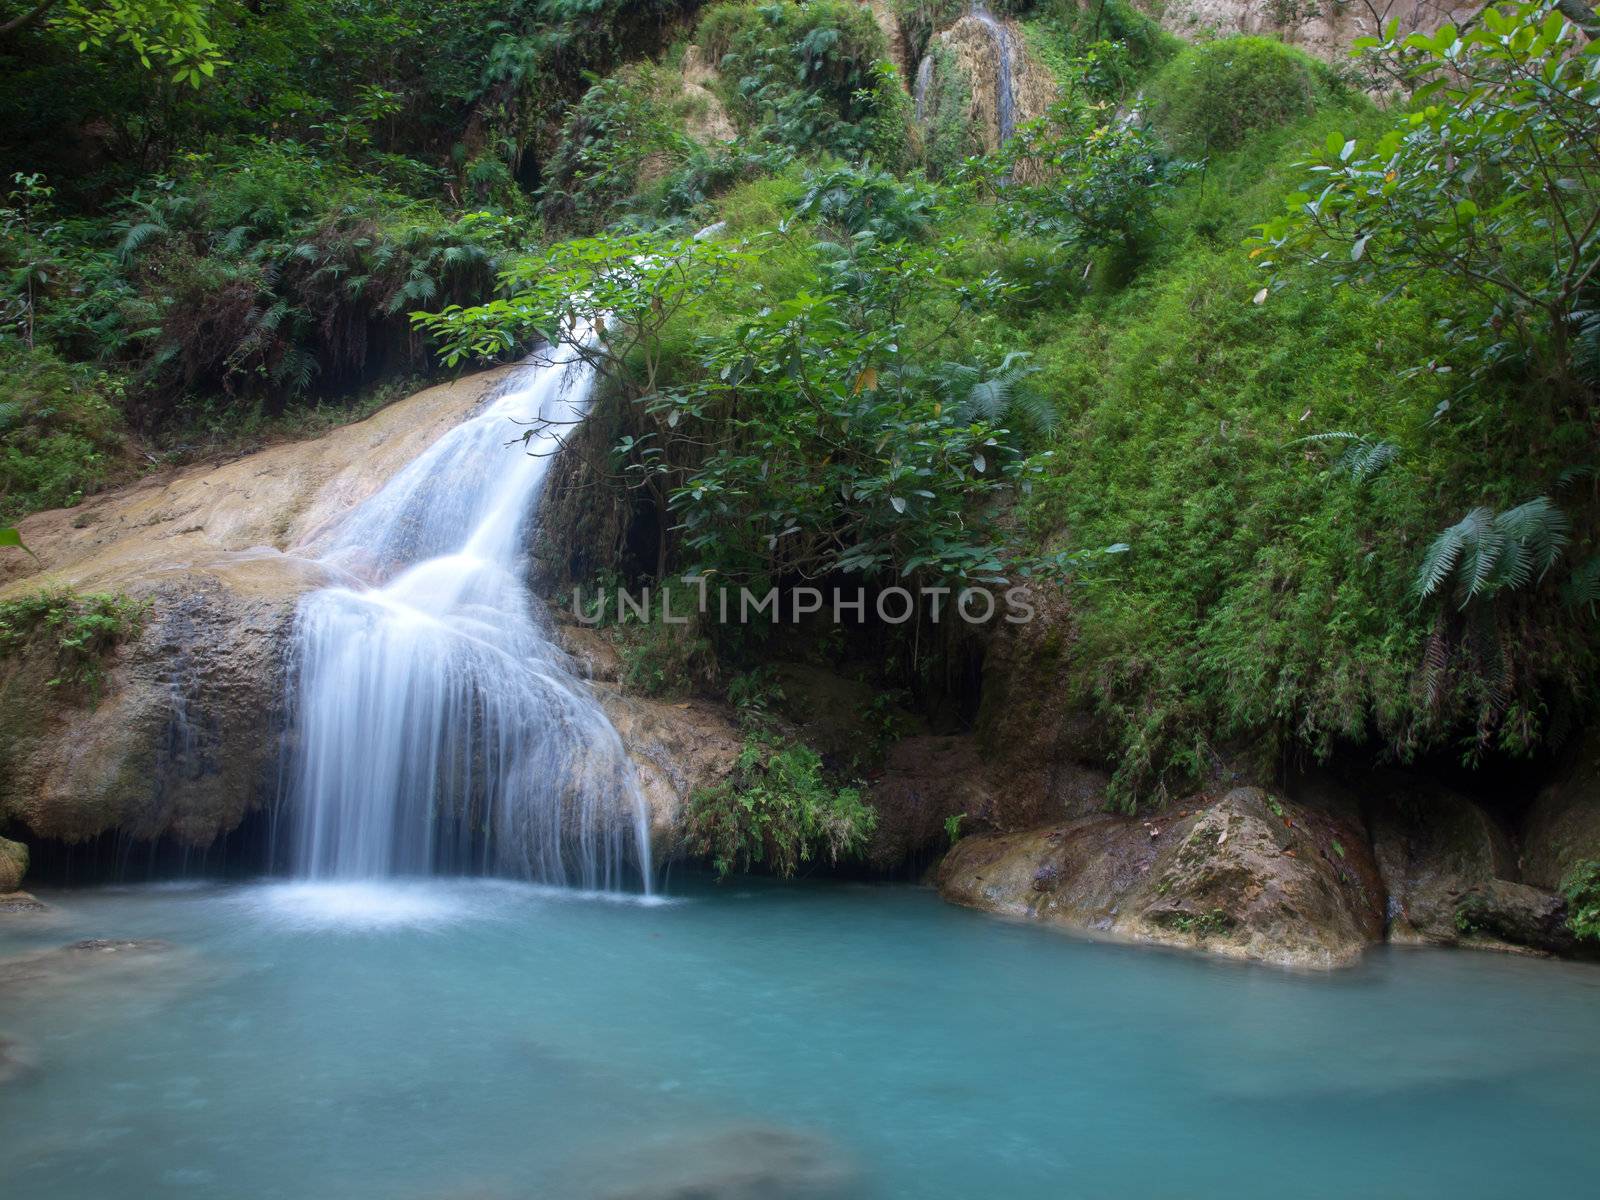 Emerald color water in tier seventh of Erawan waterfall, Erawan National Park, Kanchanaburi, Thailand